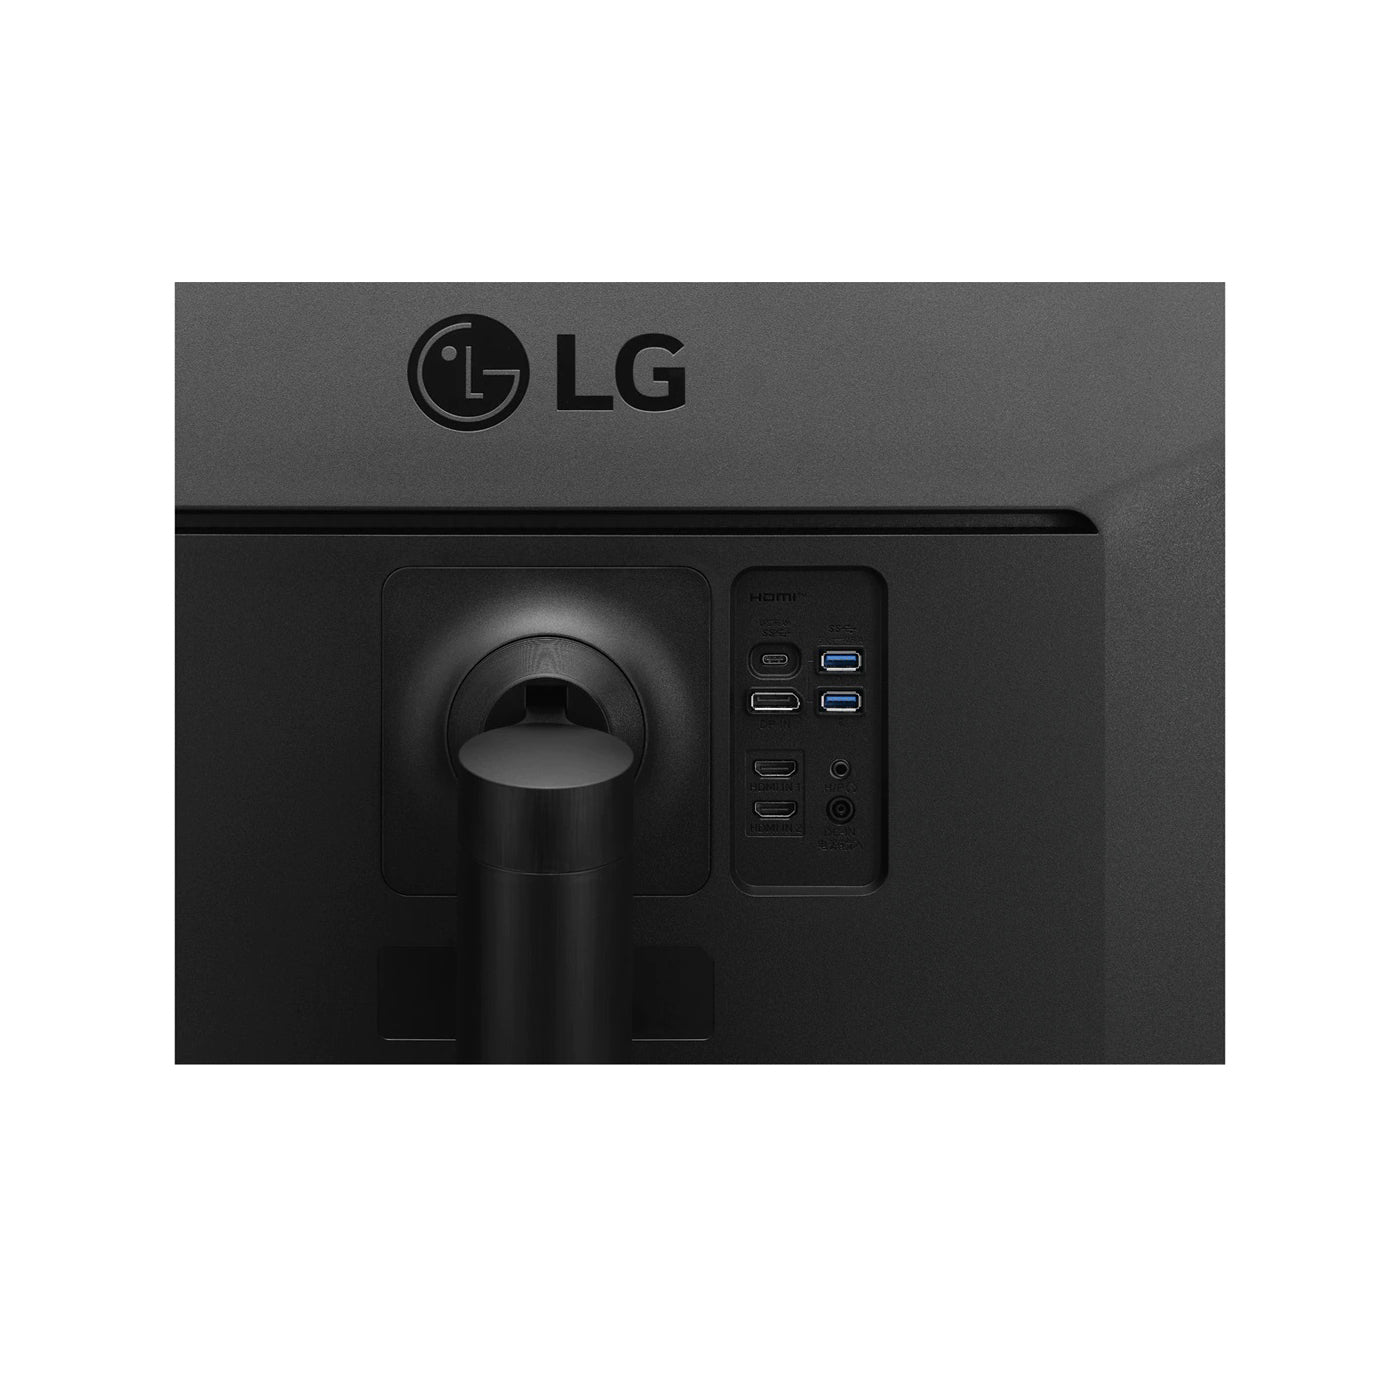 LG 35WN75CN-B 35" UltraWide QHD 100hz Type-C HDR Curved Monitor (Brand New)